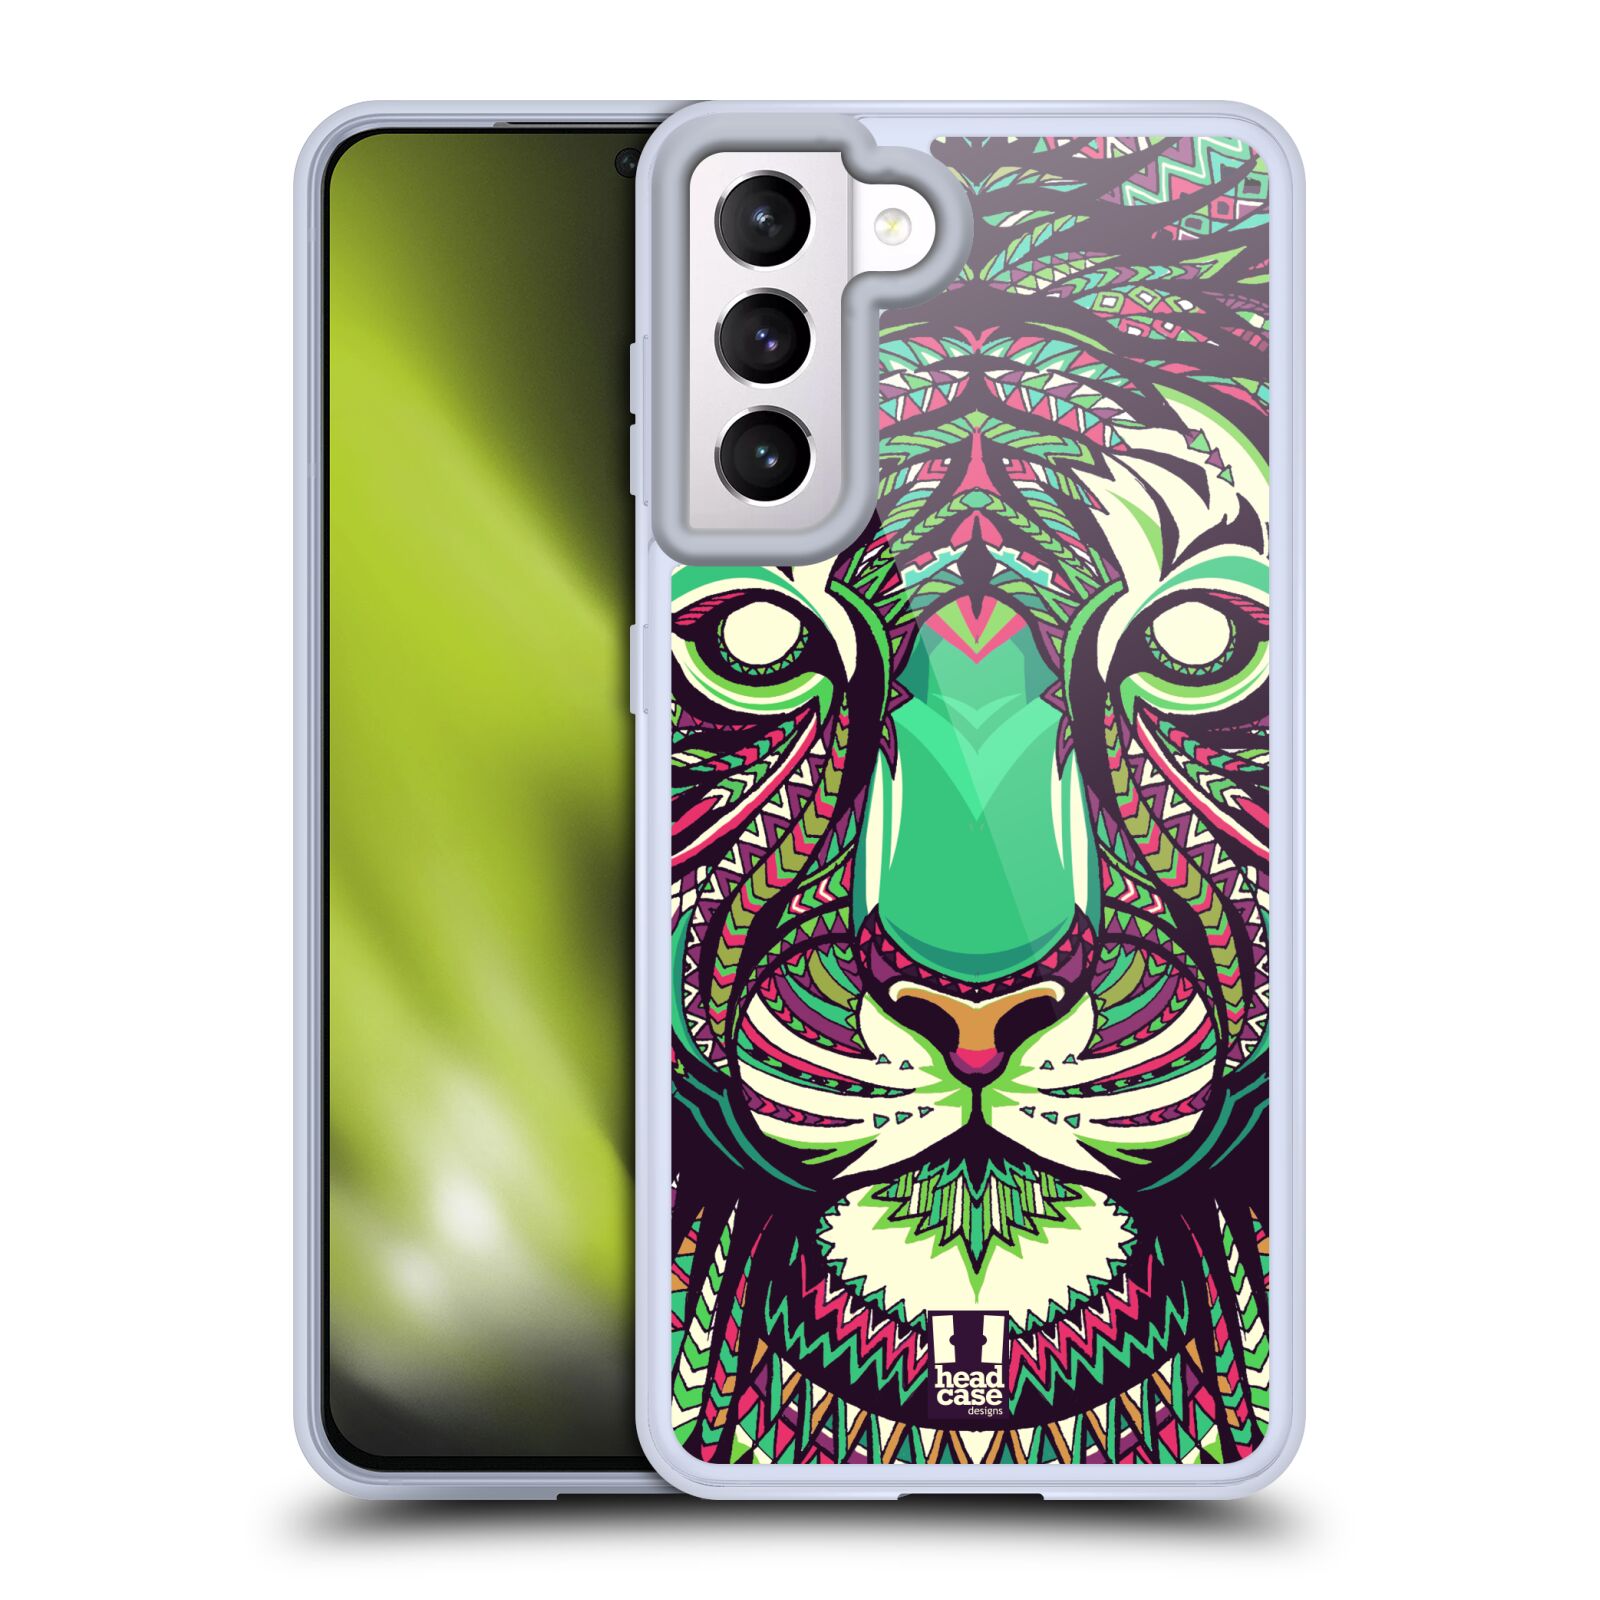 Plastový obal HEAD CASE na mobil Samsung Galaxy S21 5G vzor Aztécký motiv zvíře 2 tygr